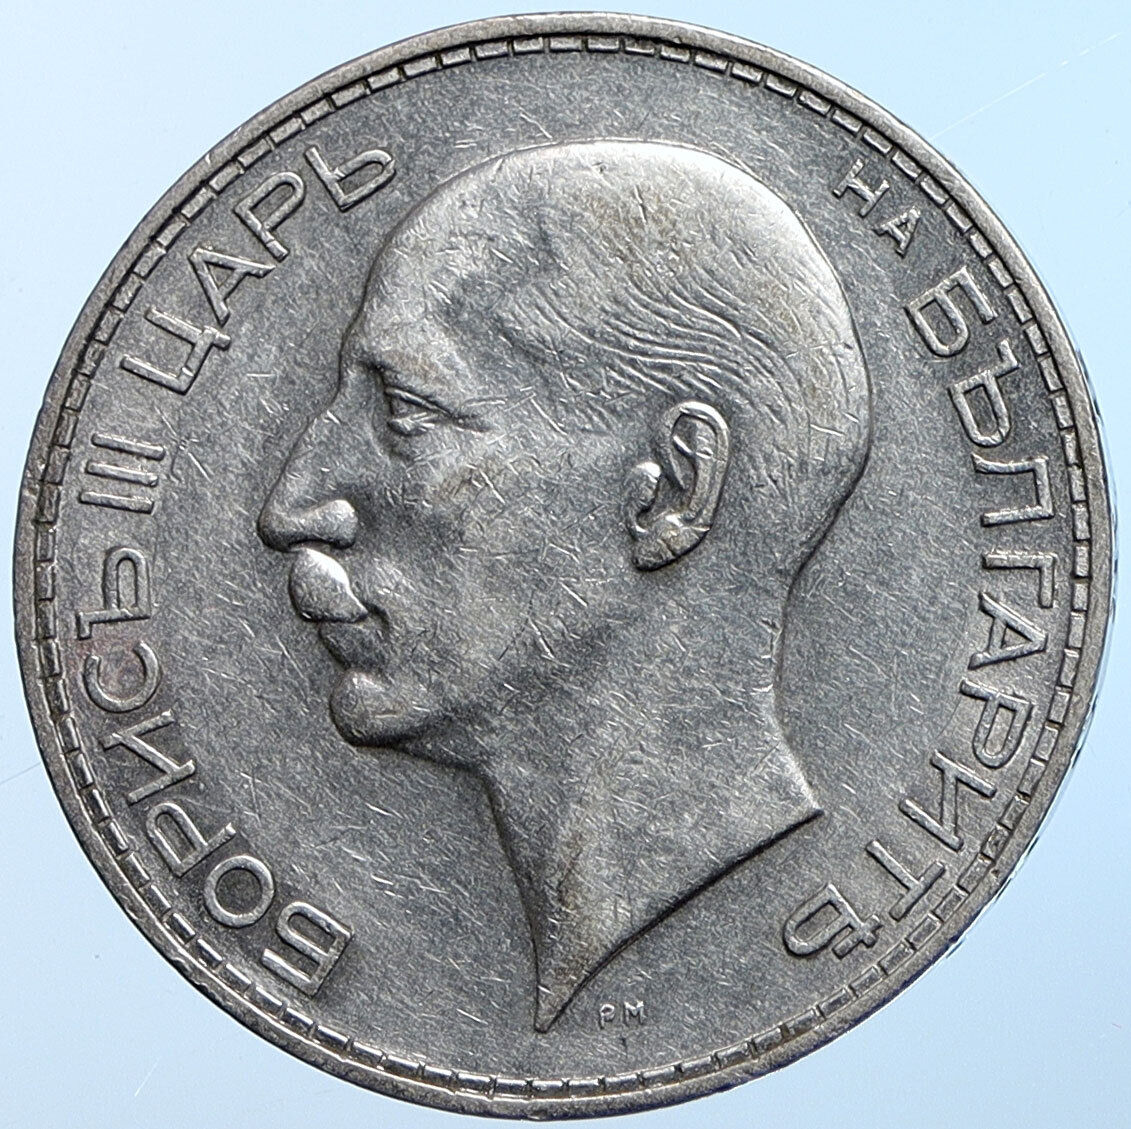 1934 Boris III Tsar of Bulgaria 100 Leva Large Old European Silver Coin i114605